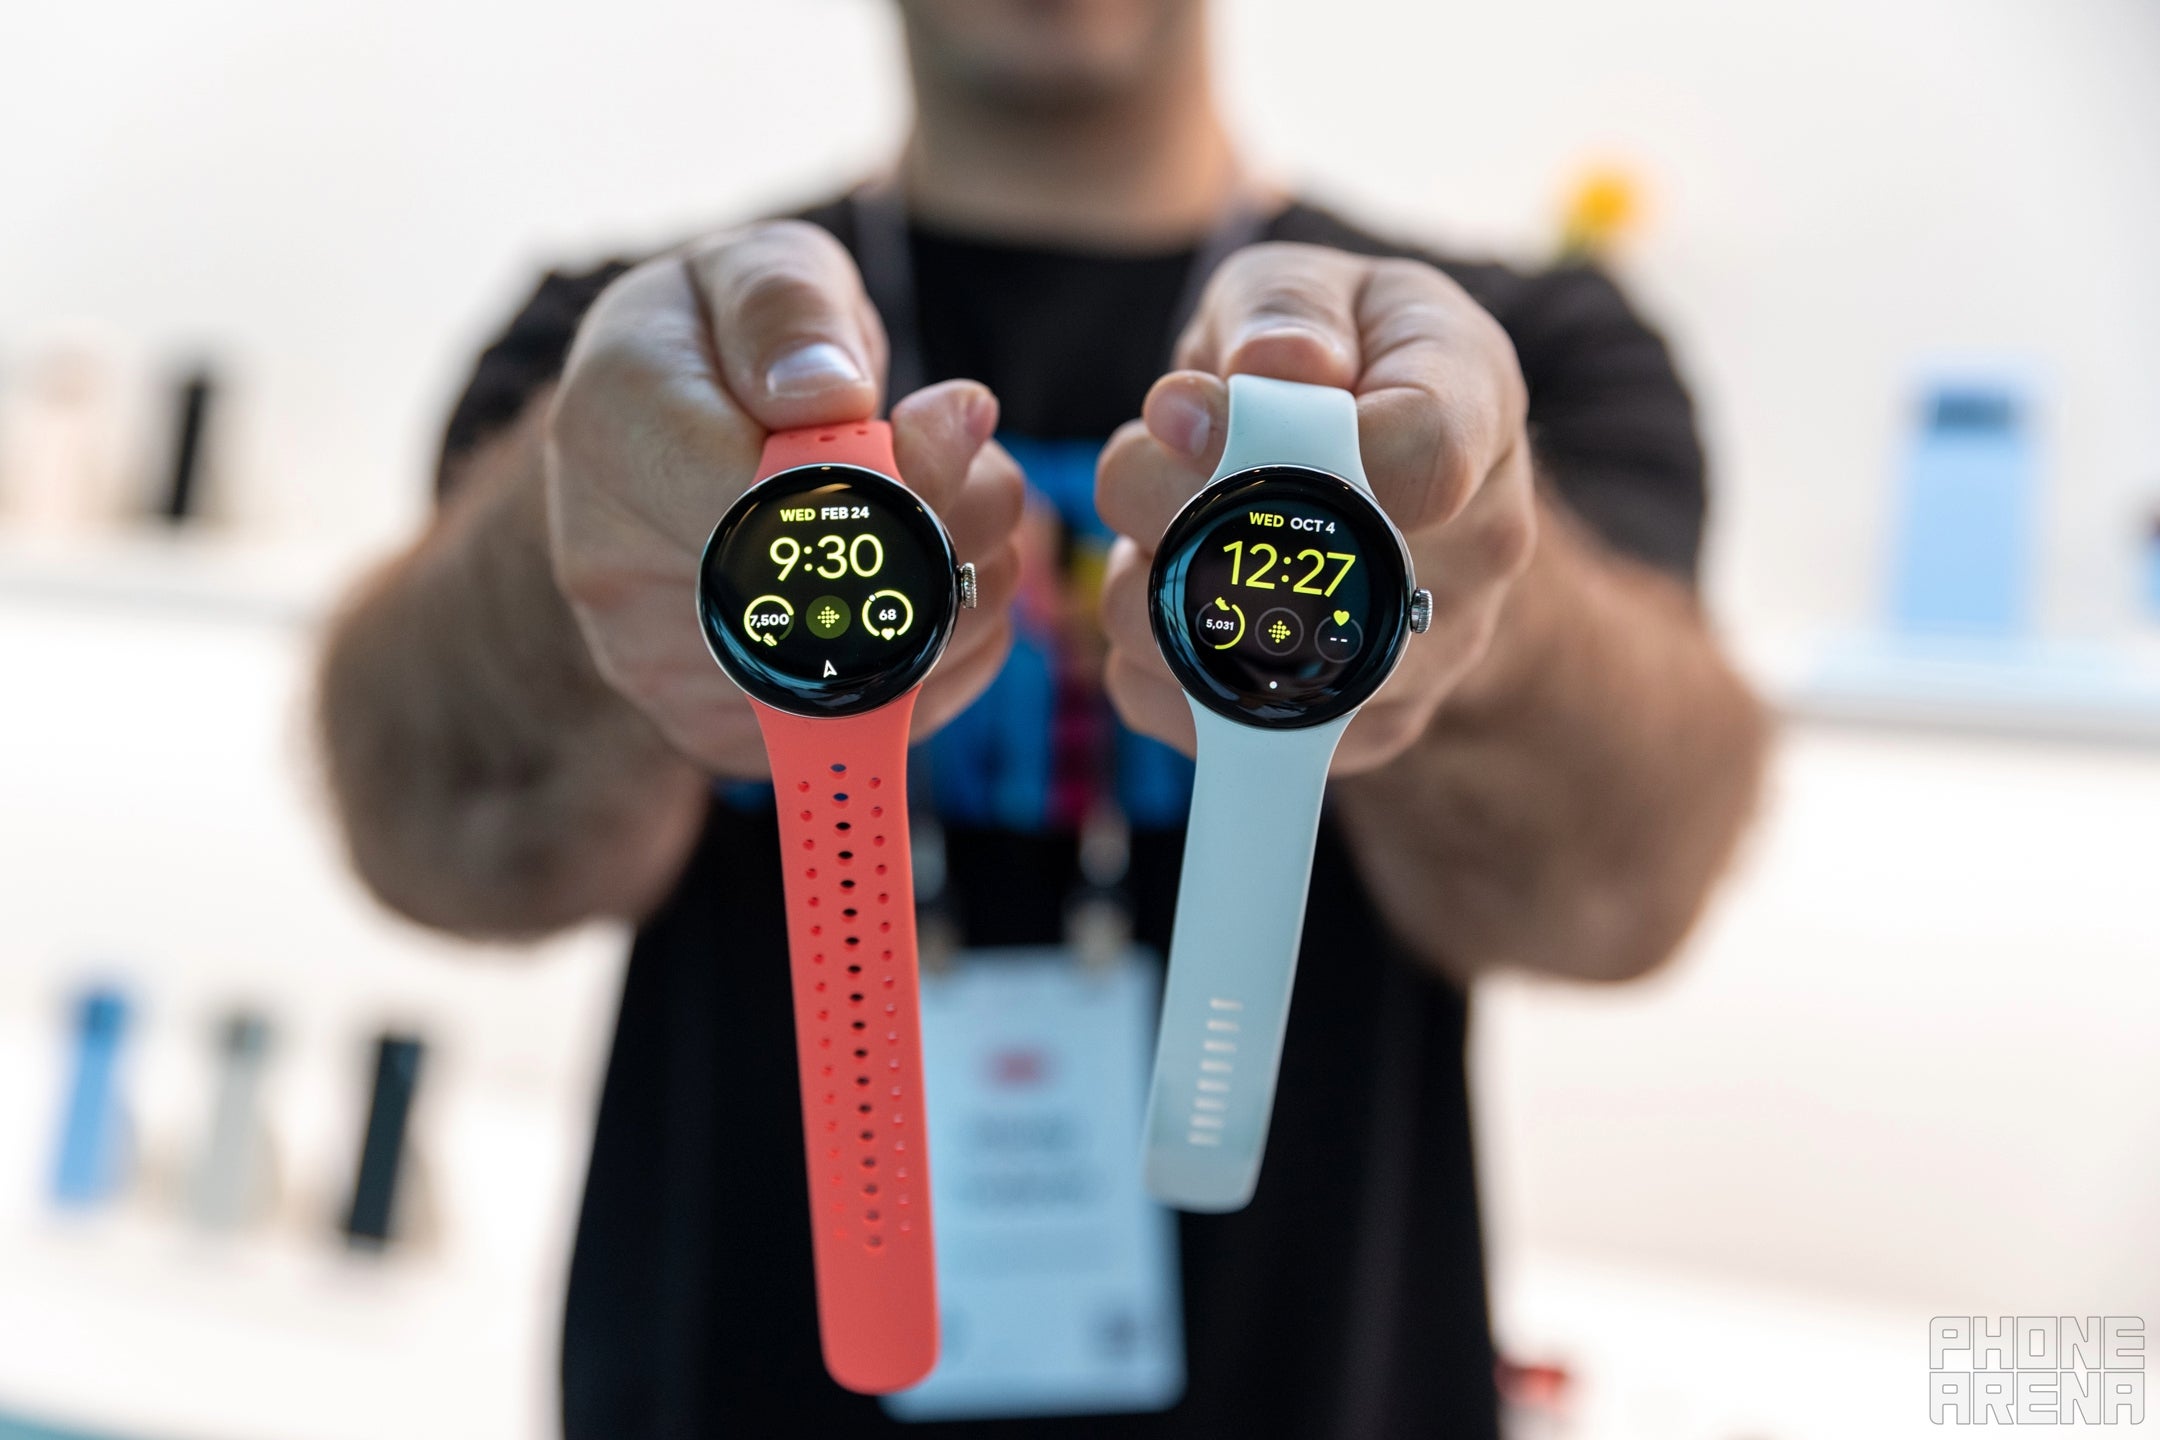 Google Pixel Watch (2022): Features, Price, Release Date